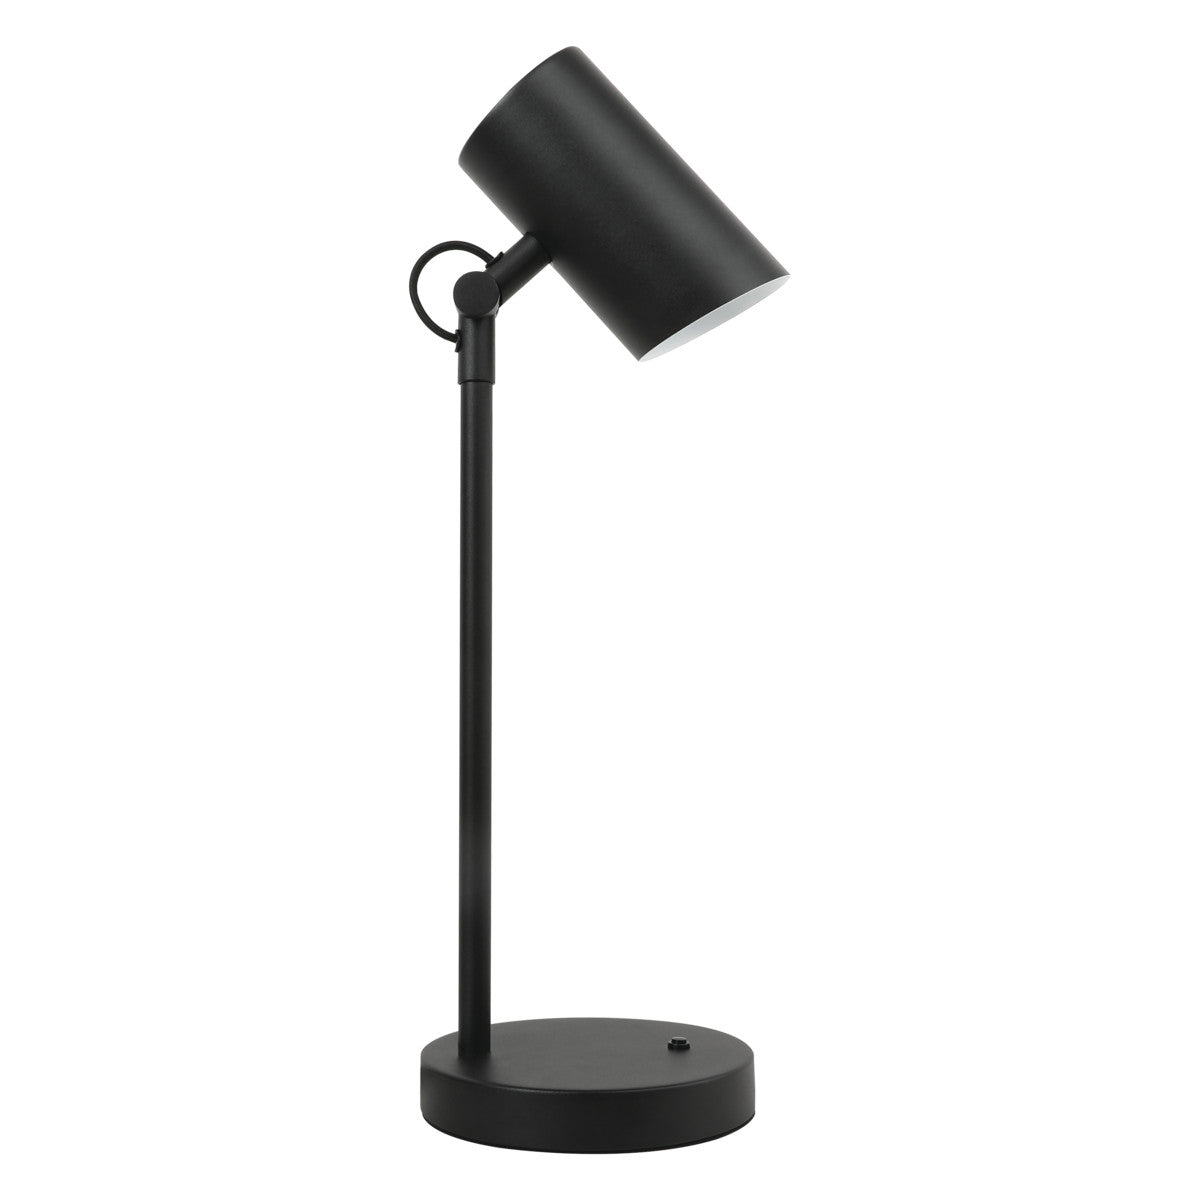 Kanlux AGZAR Adjustable Table Desk Lamp E14 SES Base Mains